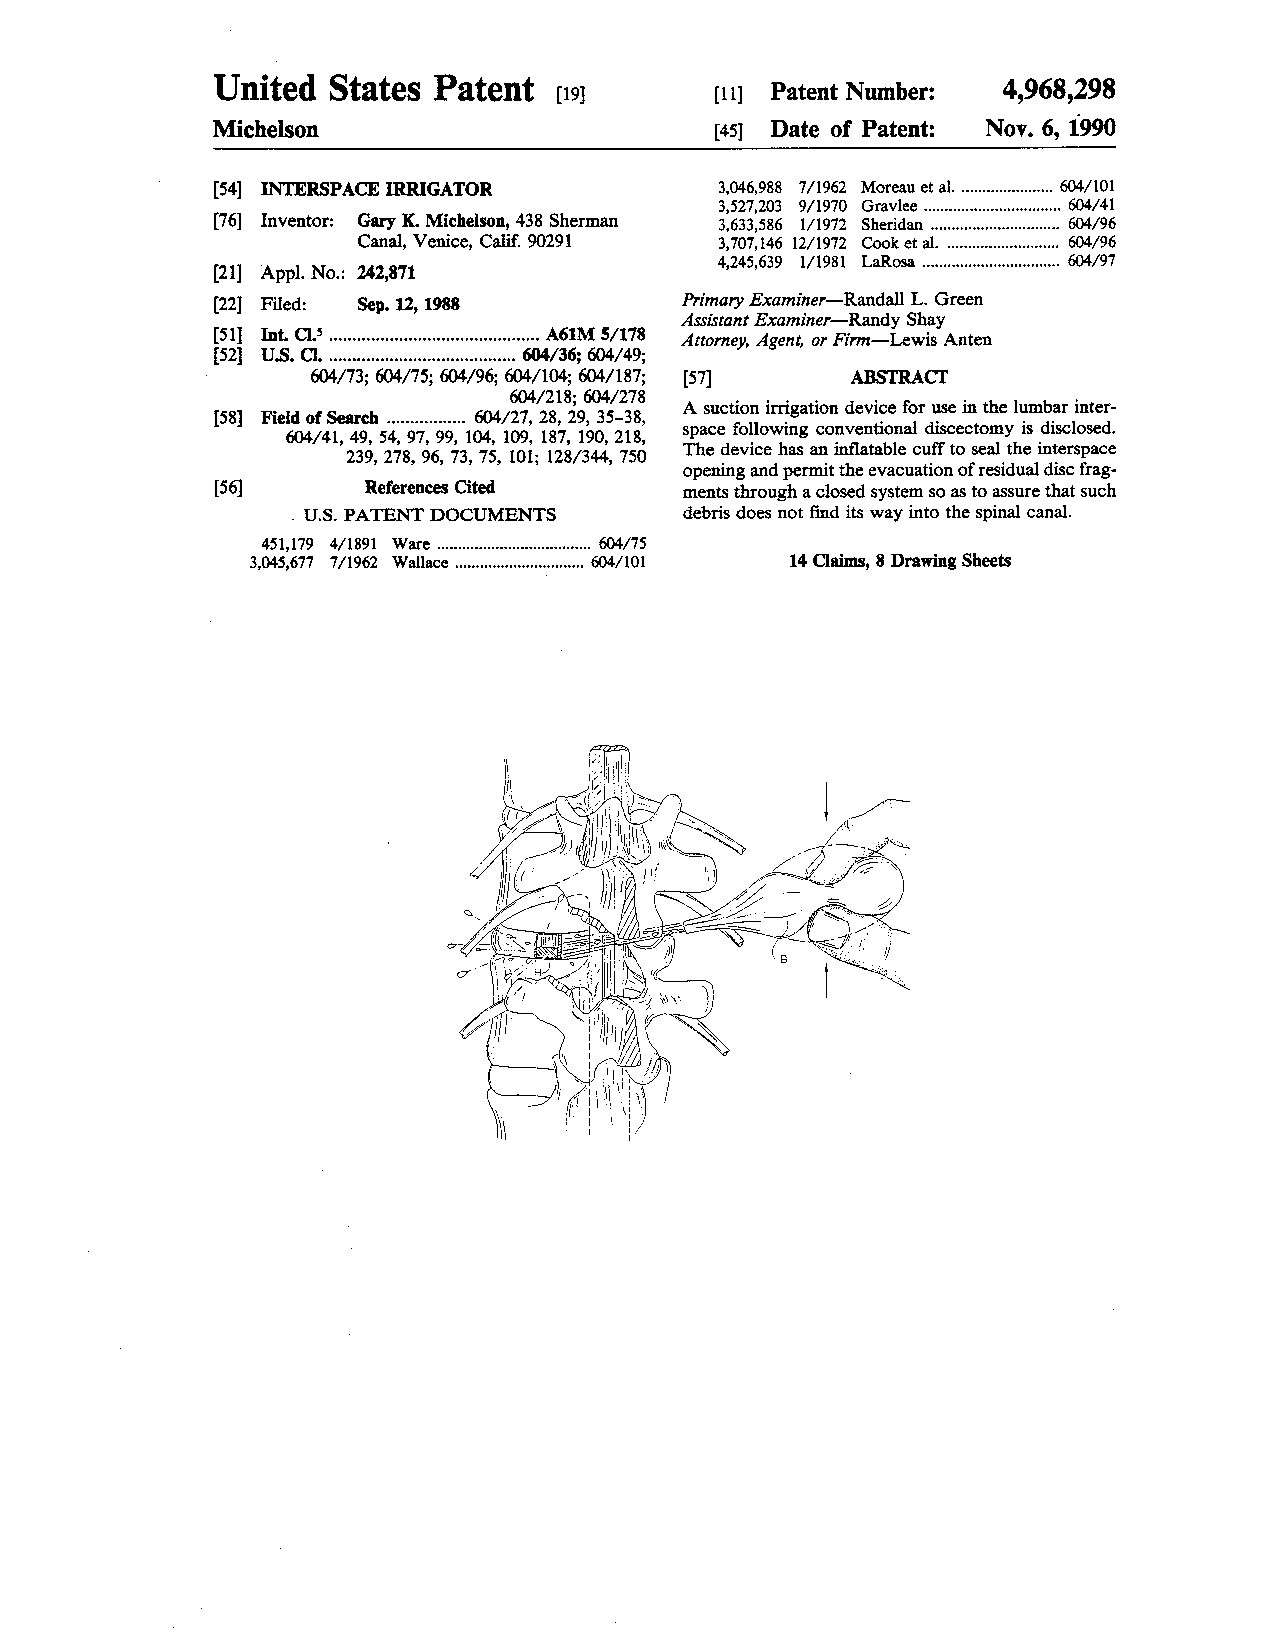 Interspace irrigator - Patent 4,968,298